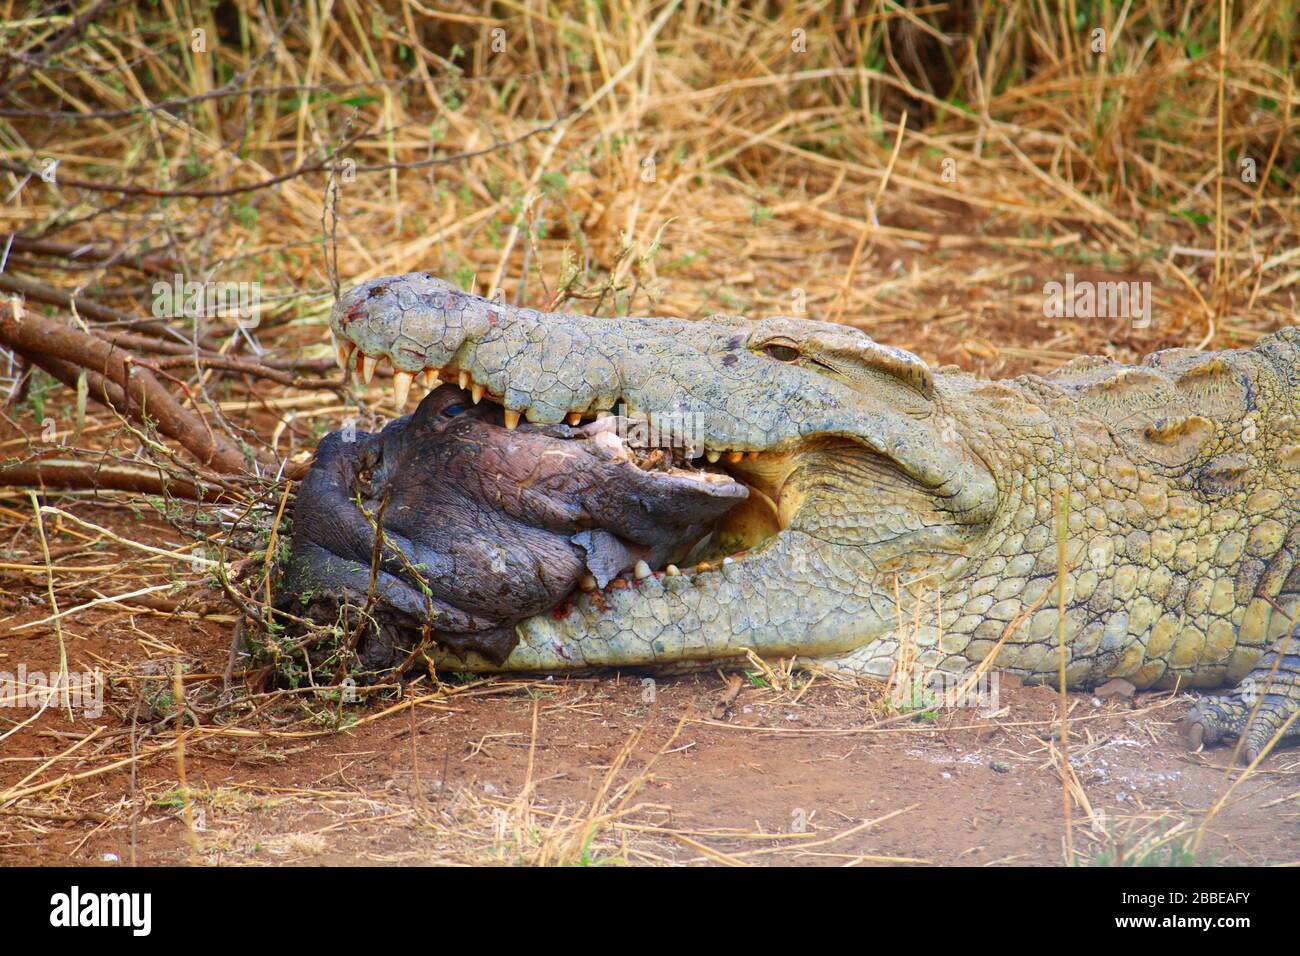 Animals of Africa - Crocodile eating Hippohead Stock Photo